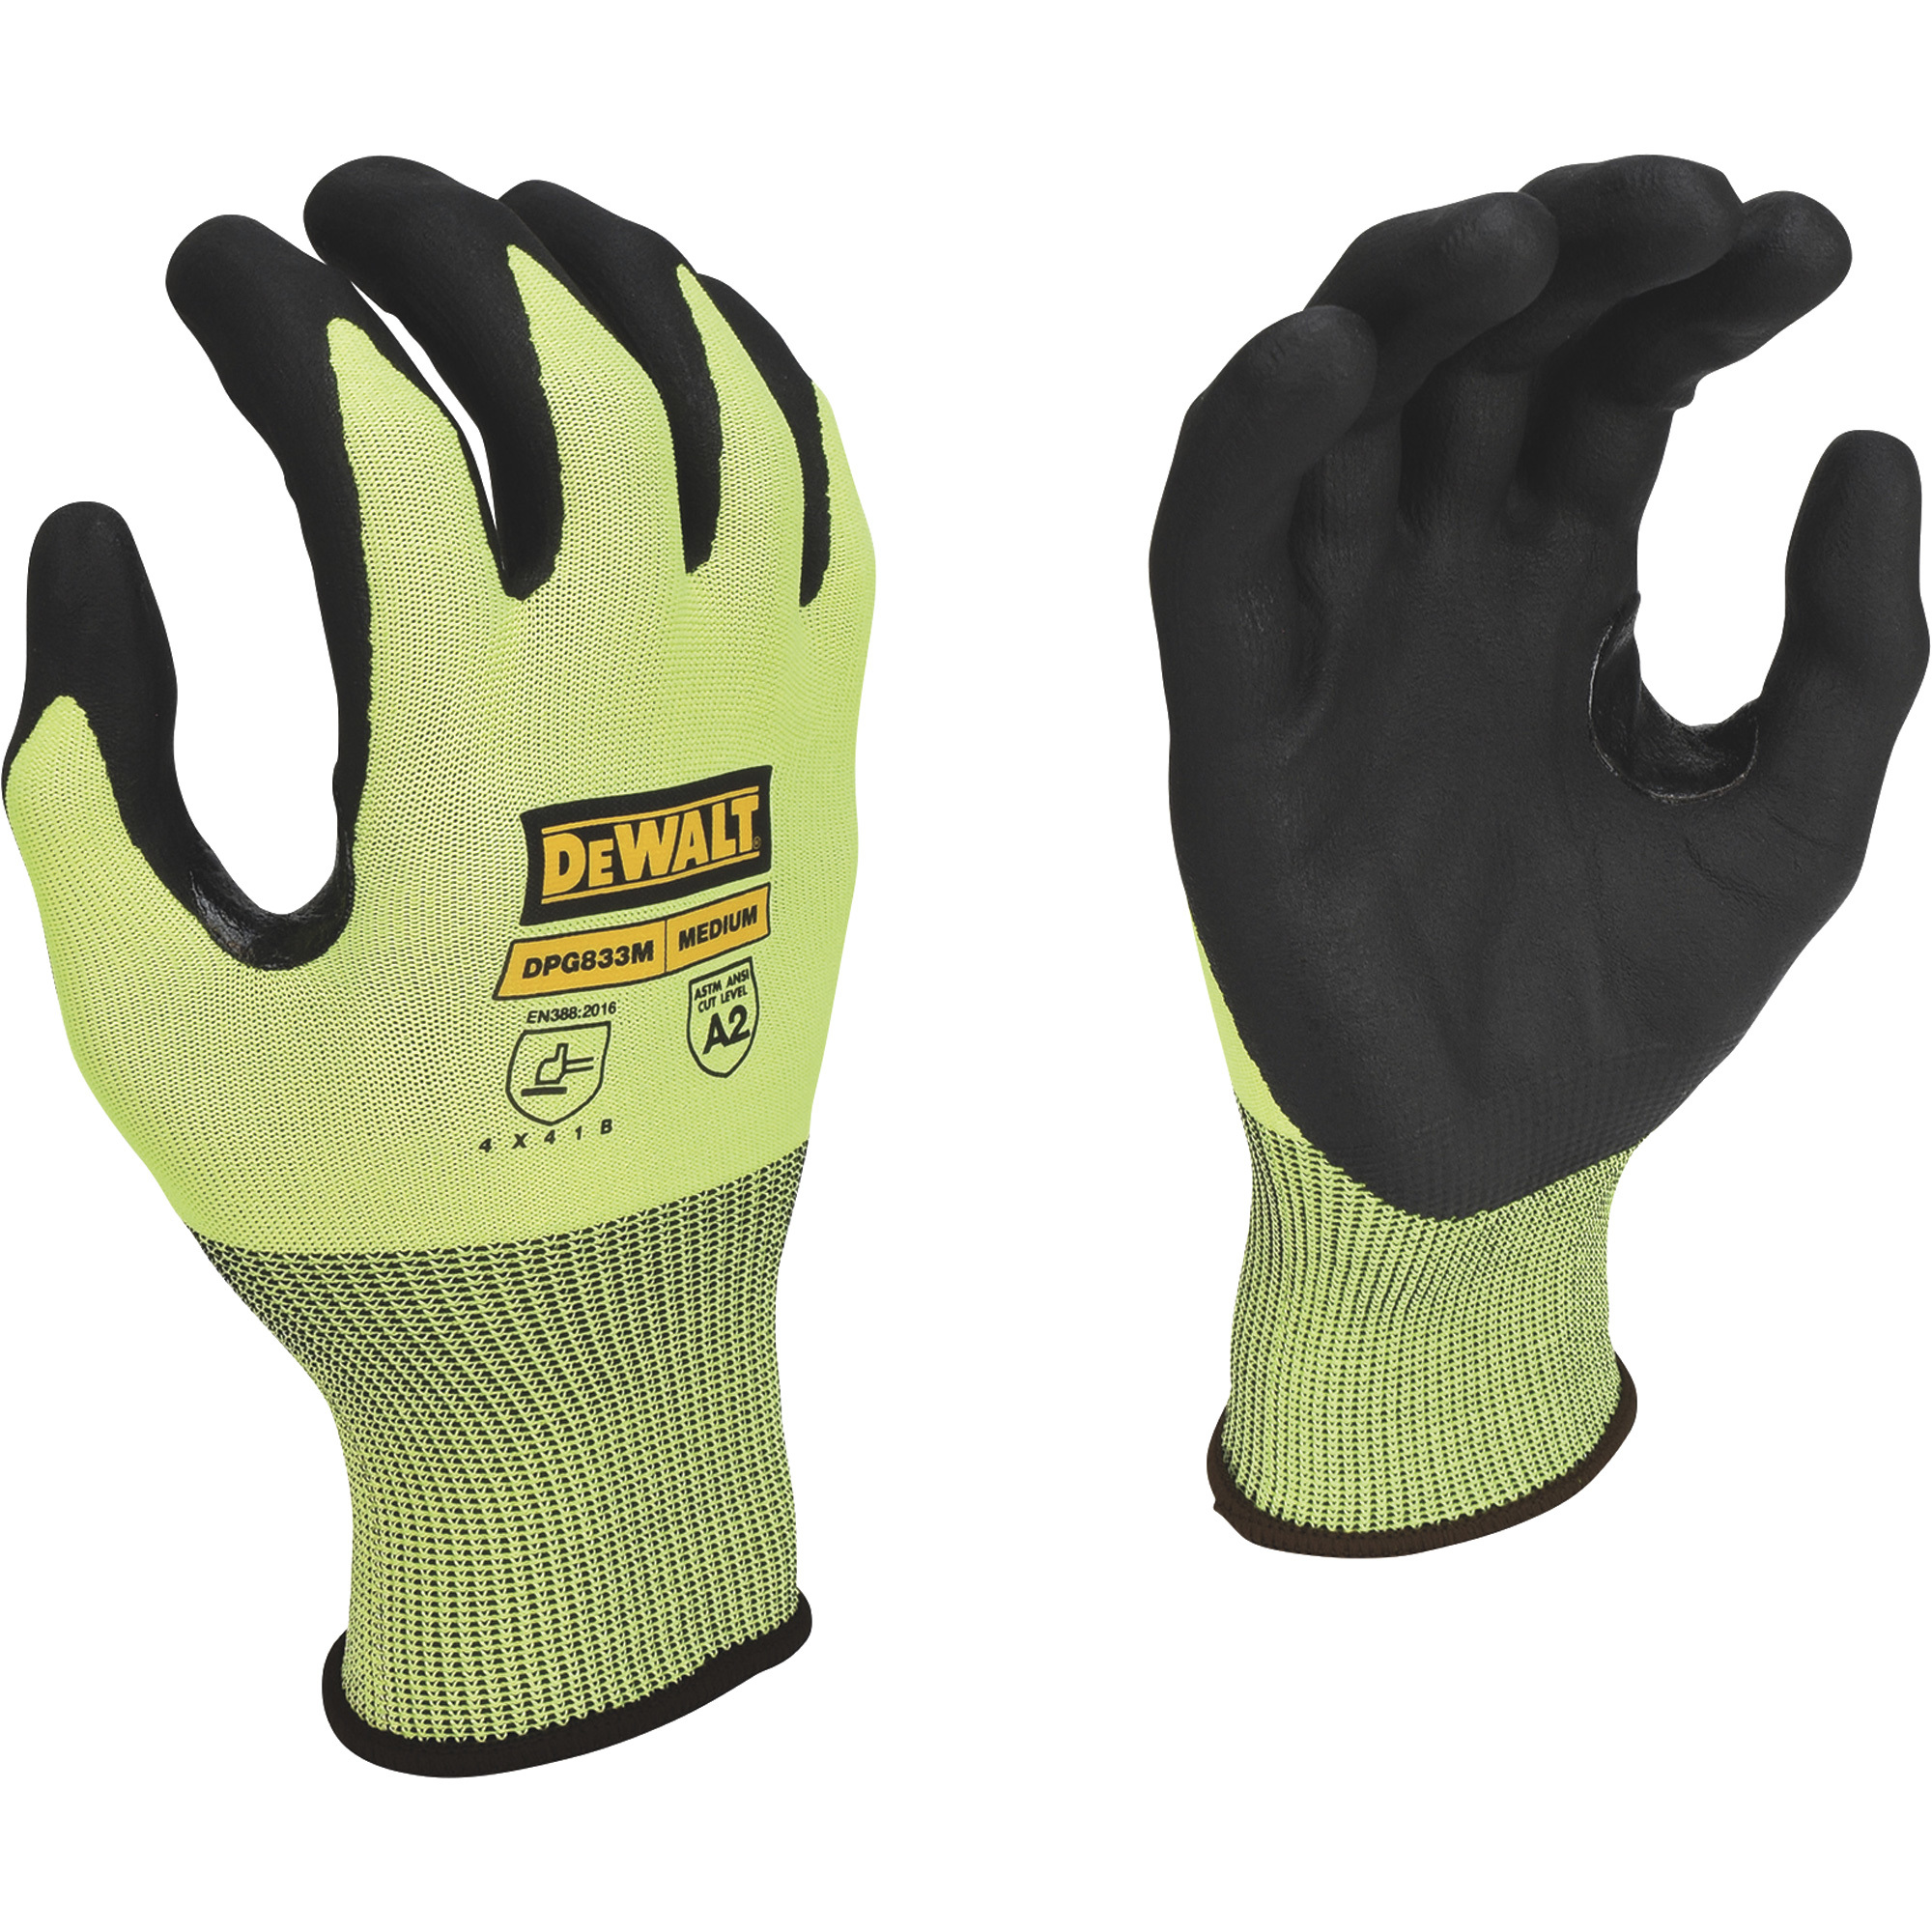 DEWALT 18-Gauge HPPE Cut-Resistant Level A2 Gloves â Hi-Vis Green/Black, Large, Model DPG833TL